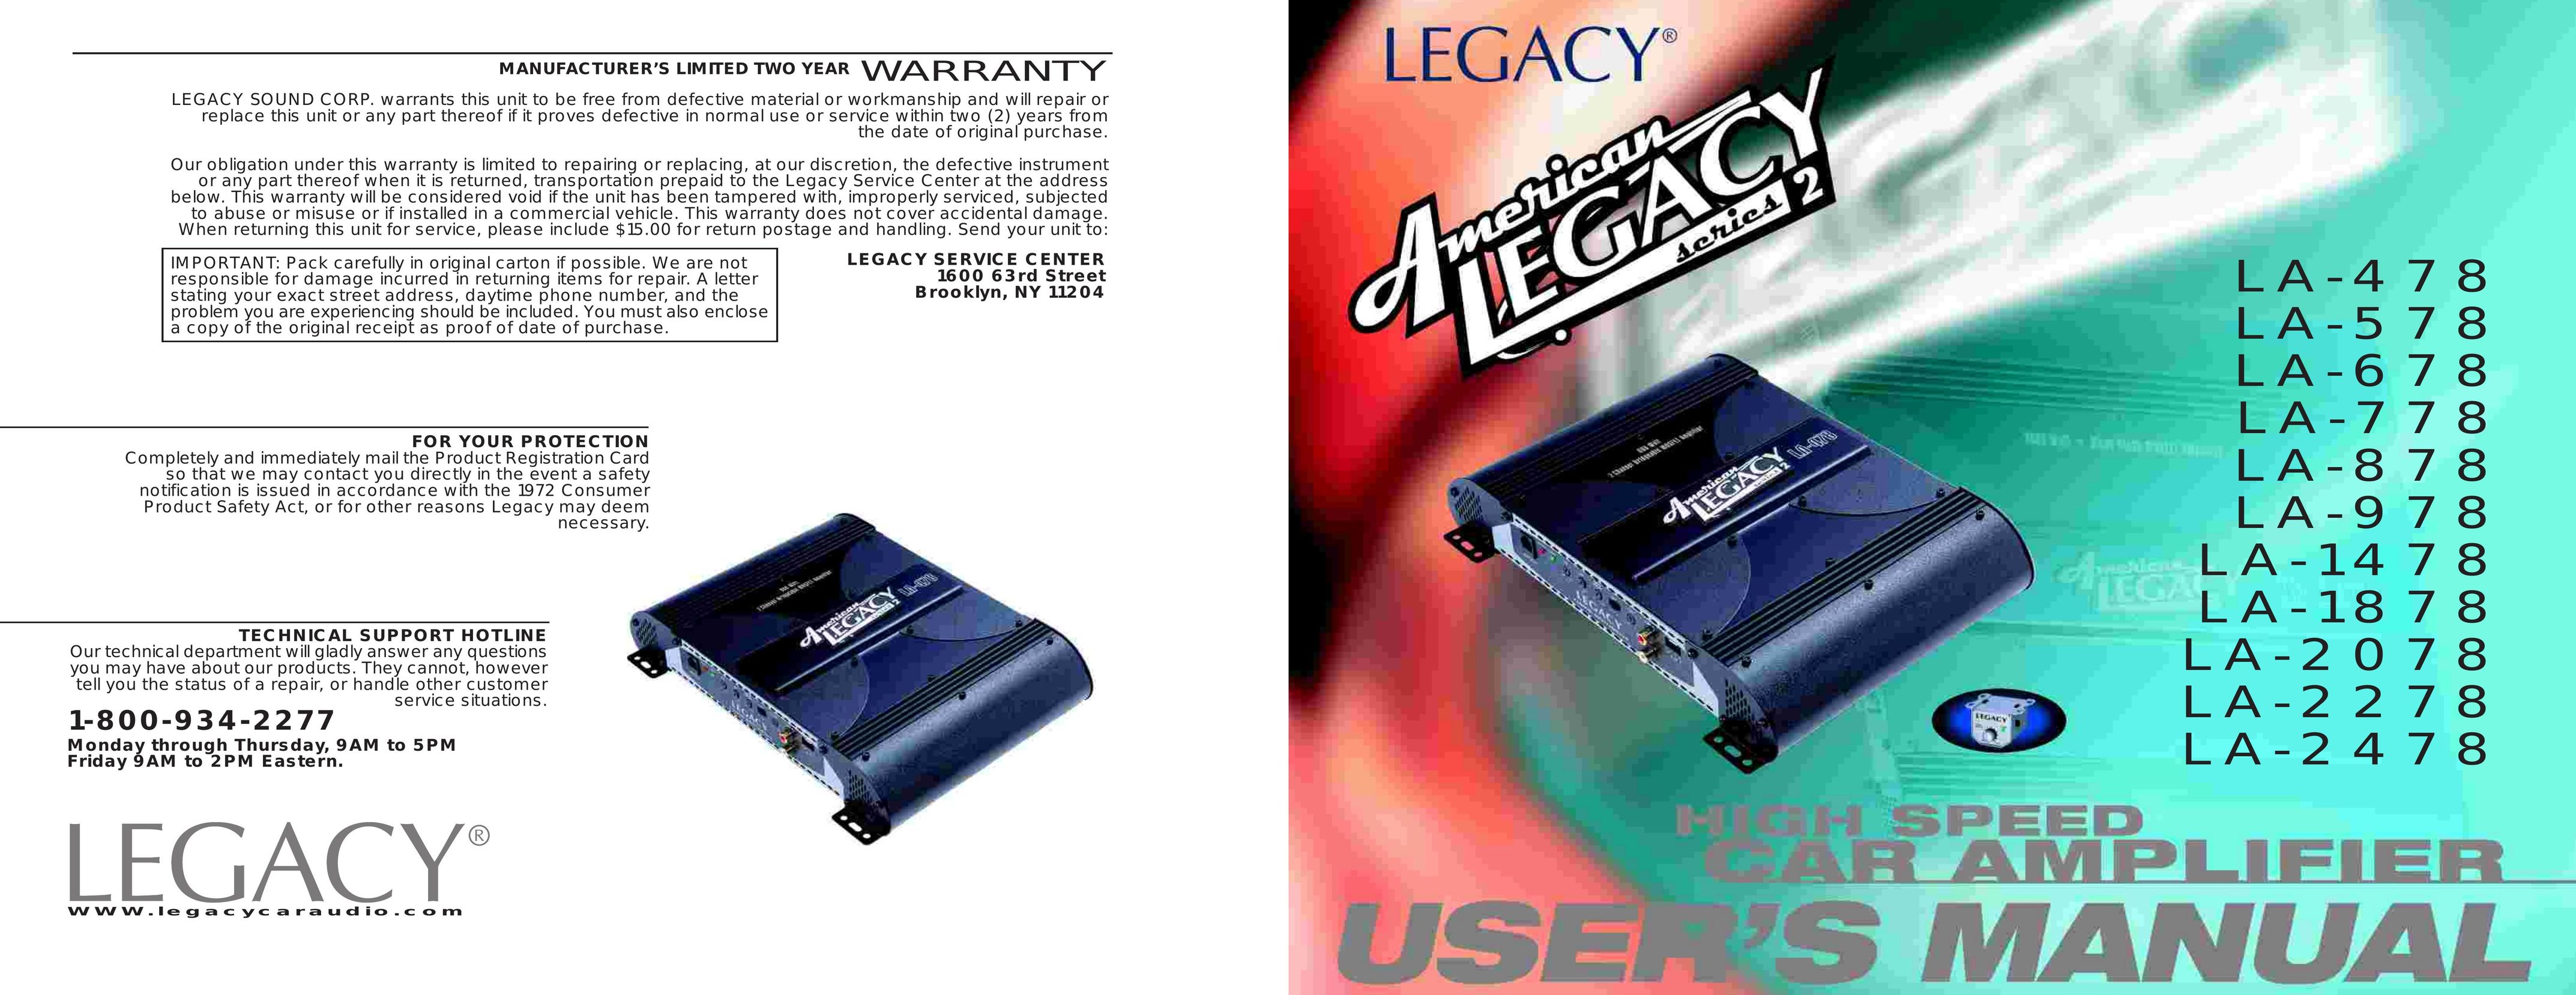 Legacy Car Audio LA-578 Car Amplifier User Manual